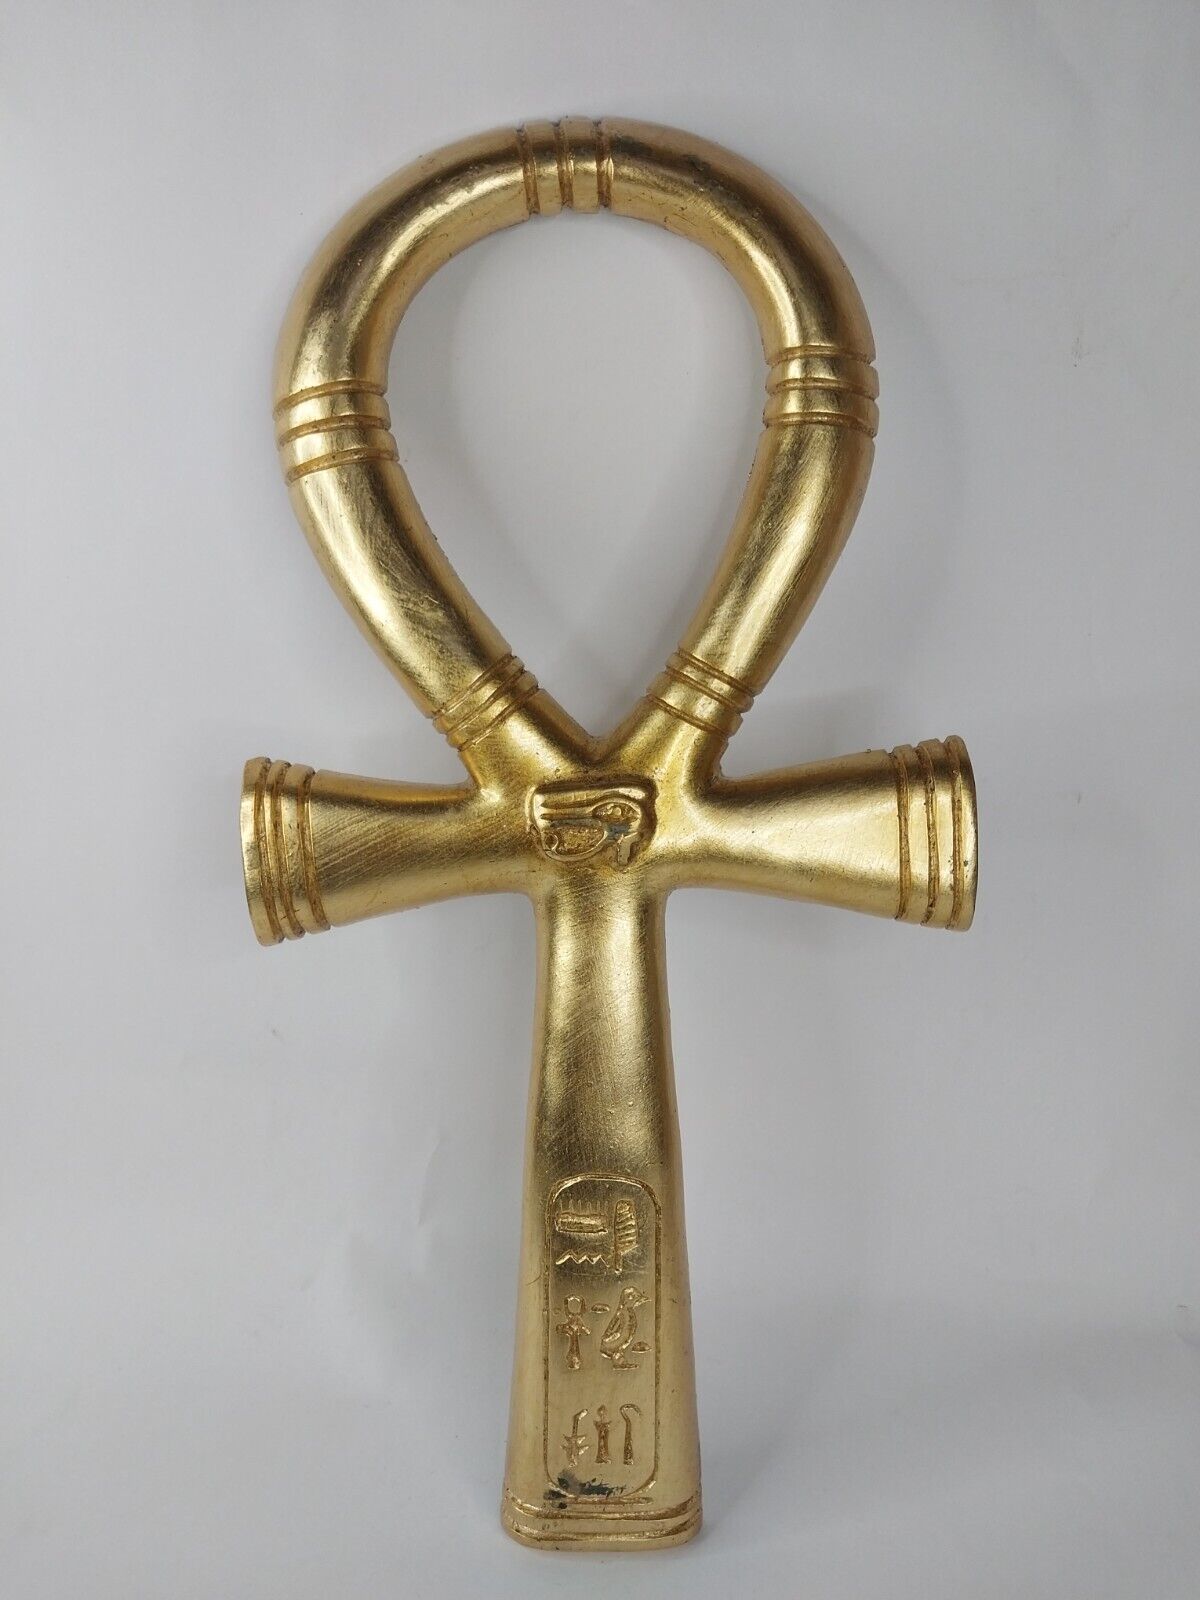 RARE ANCIENT EGYPTIAN ANTIQUE Ankh Key of Life & Eye of Horus Symbol Protection